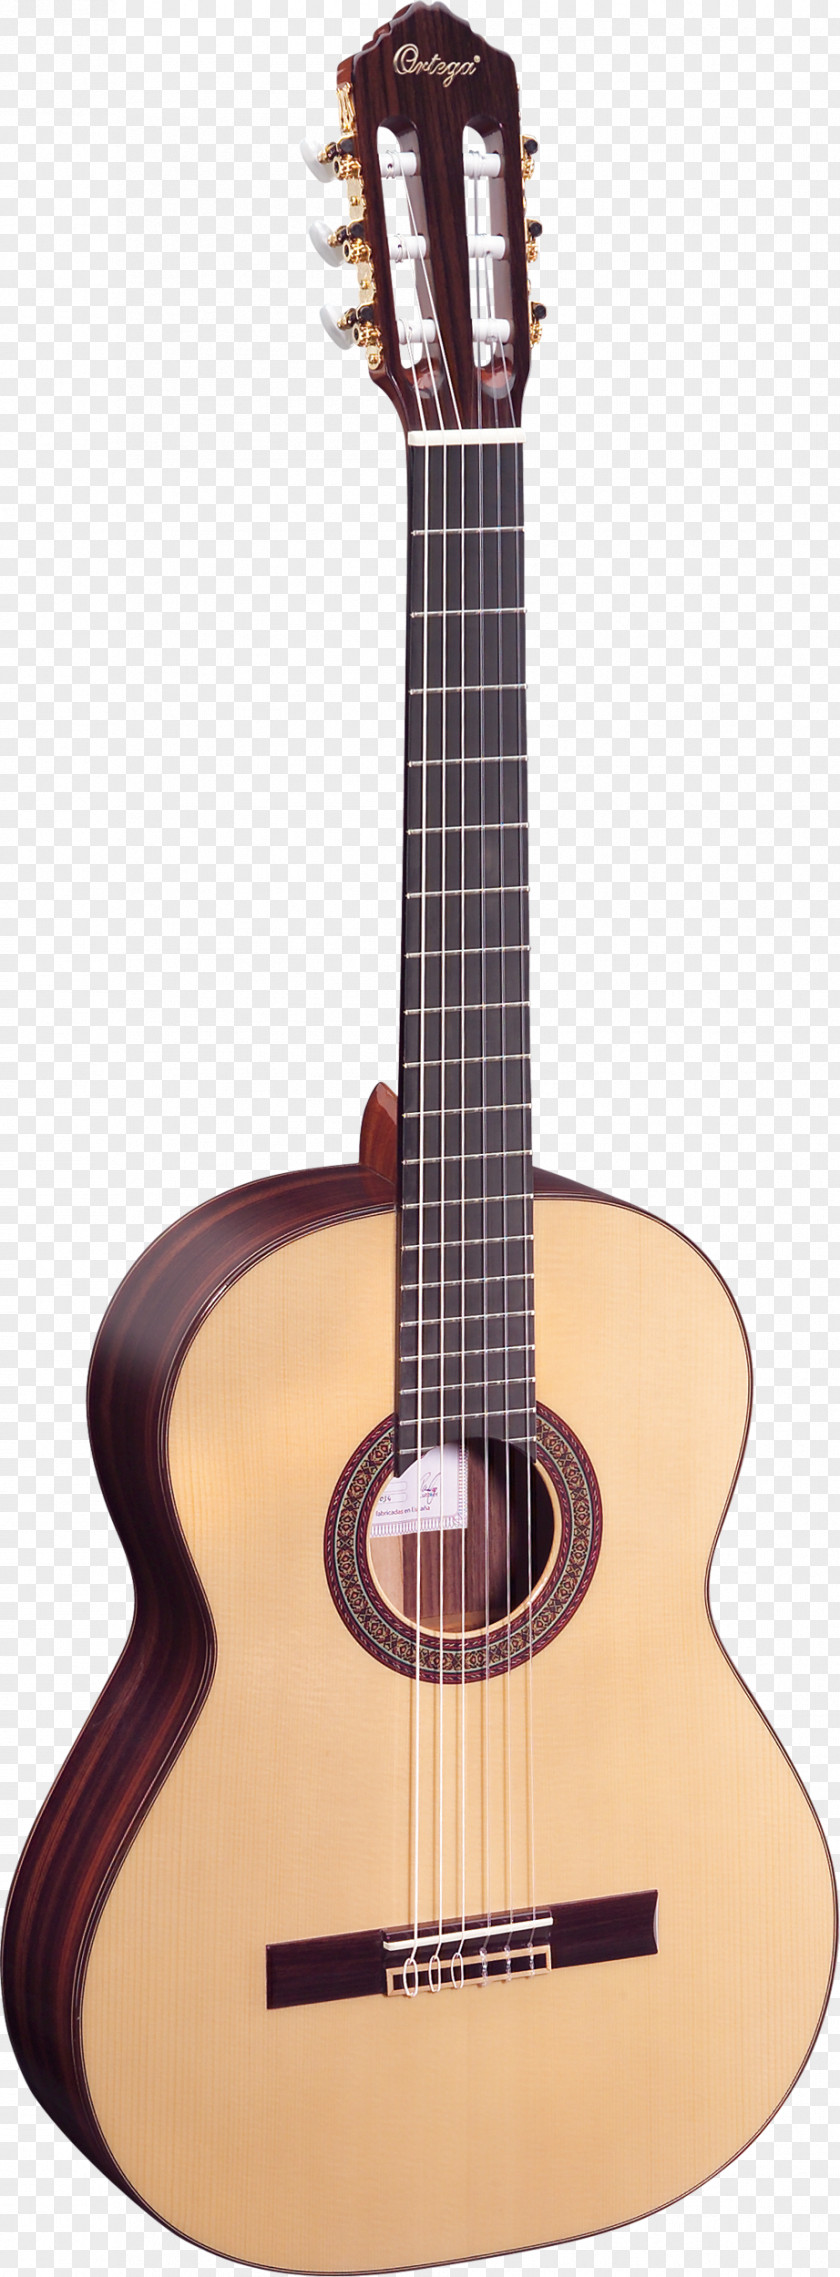 Amancio Ortega Twelve-string Guitar Steel-string Acoustic Parlor PNG